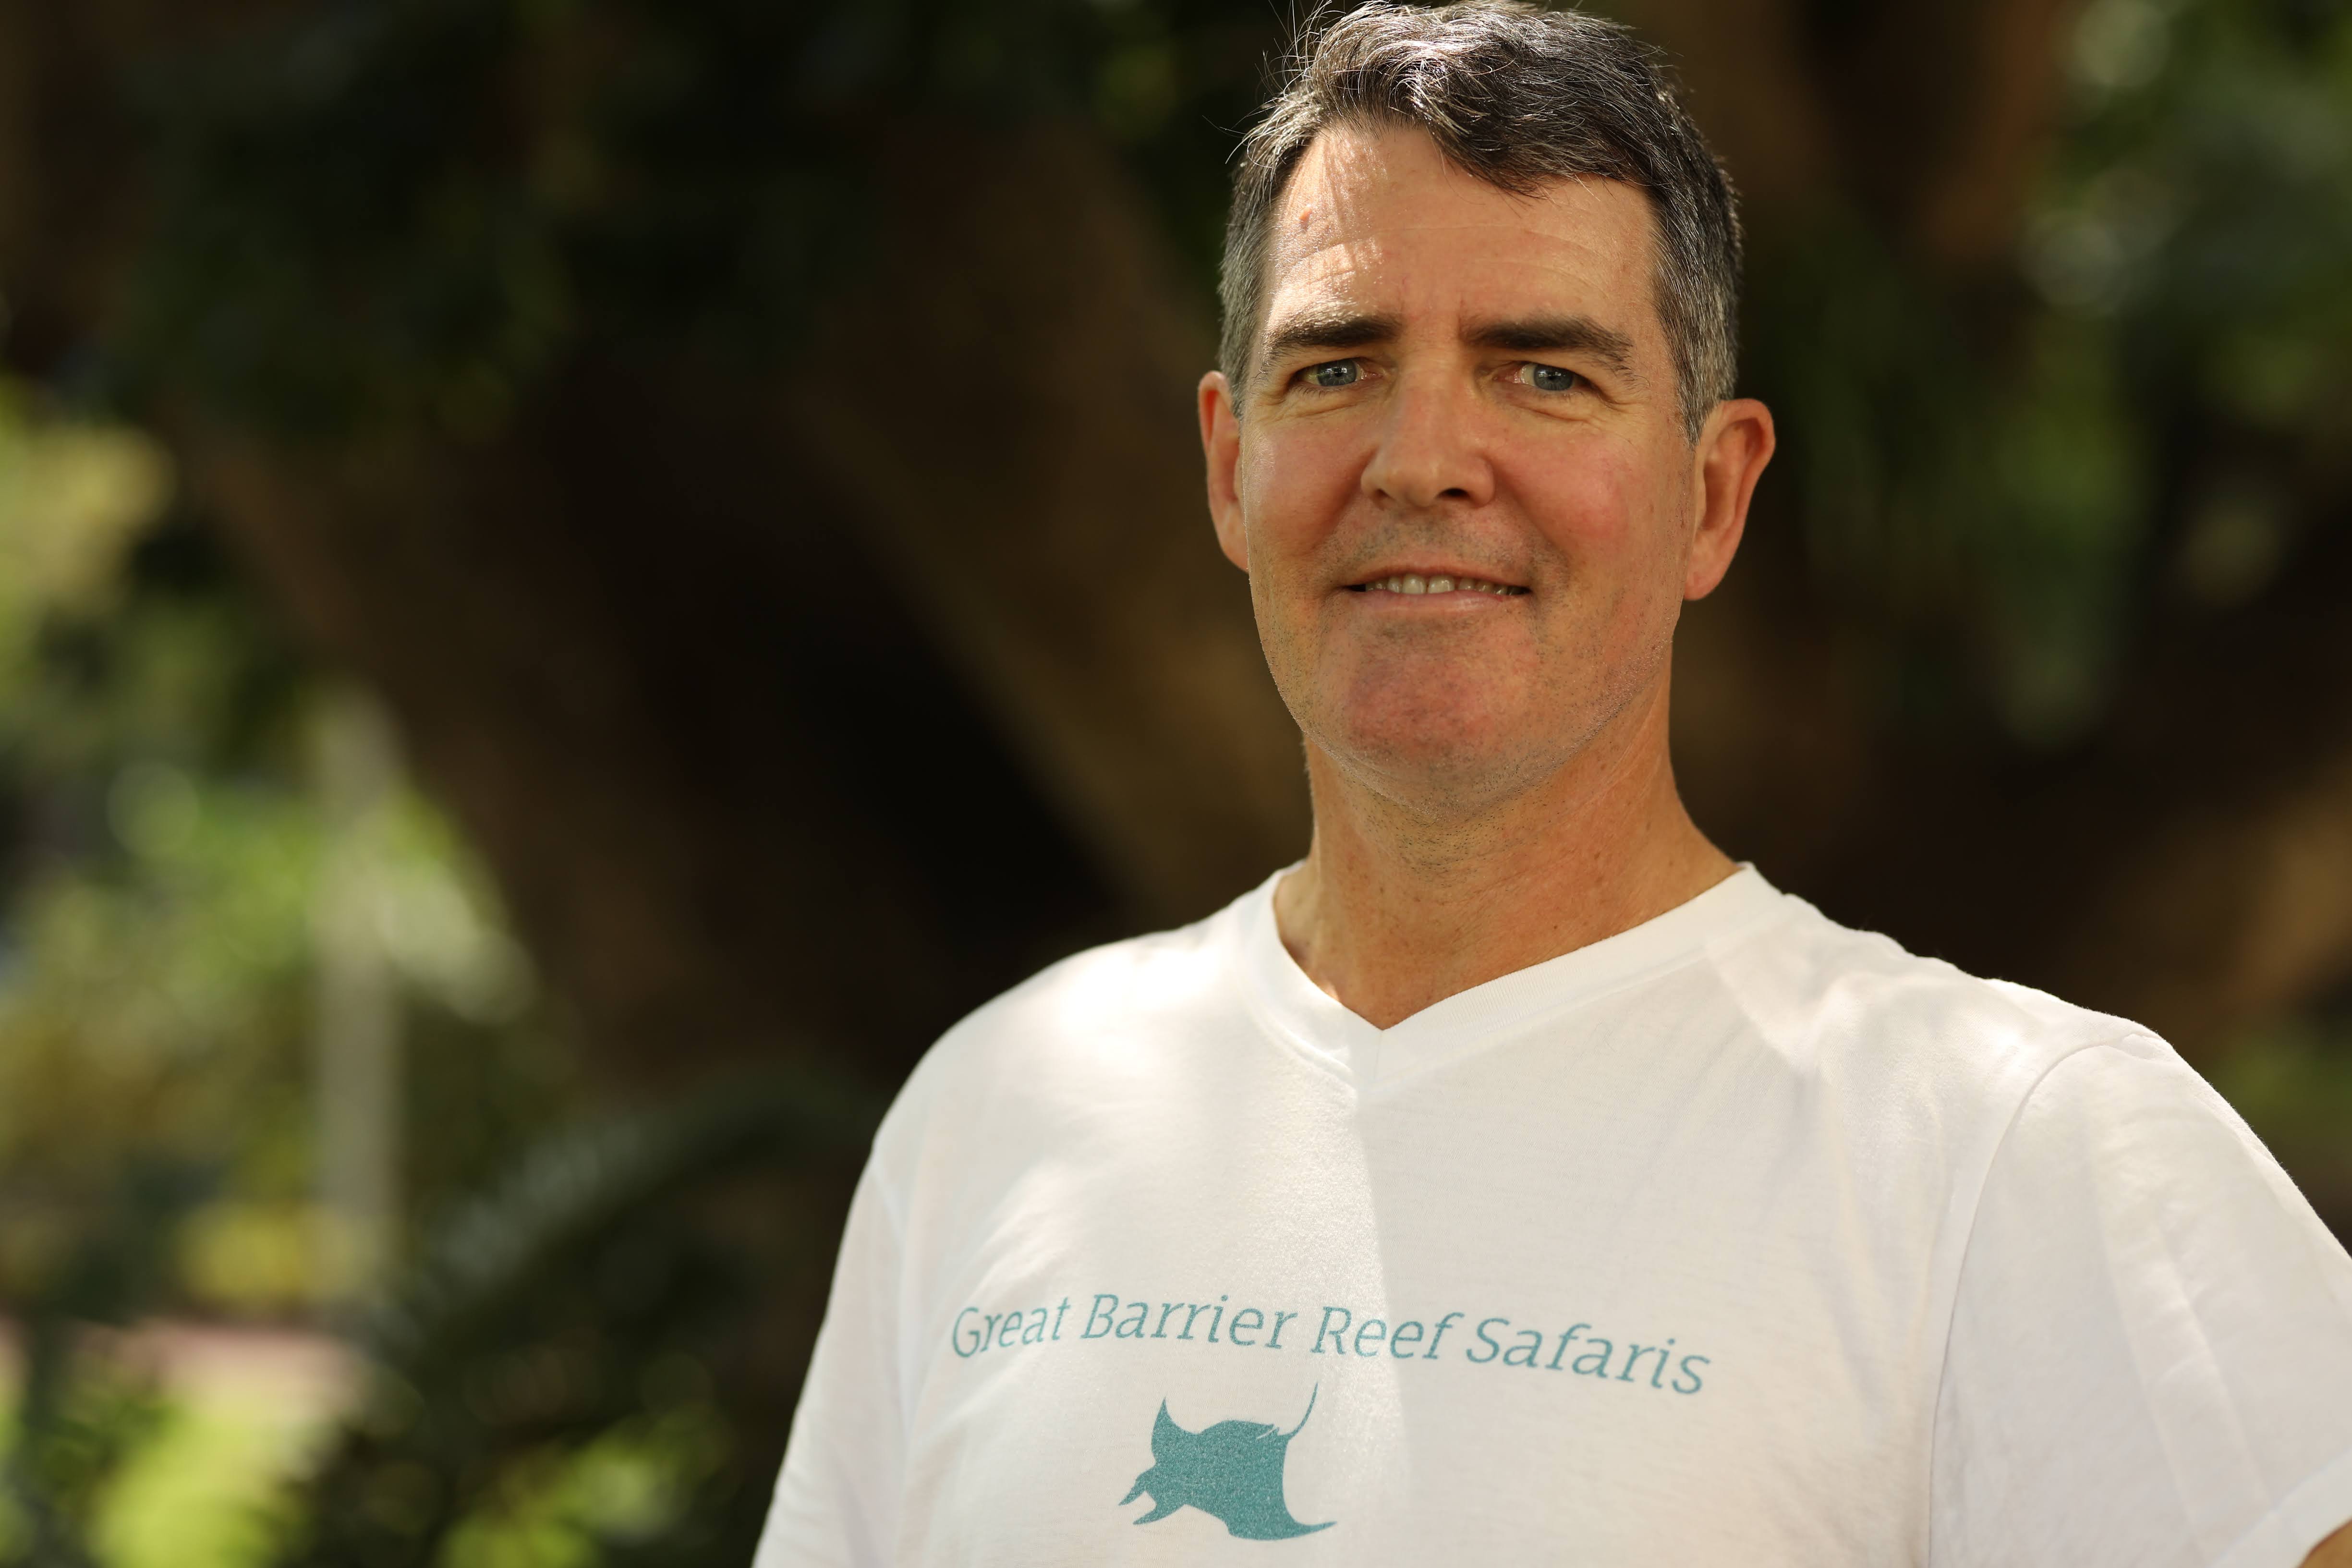 Stuart alexander wearing a t-shirt with &quot;Great Barrier Reef Safaris&quot; 